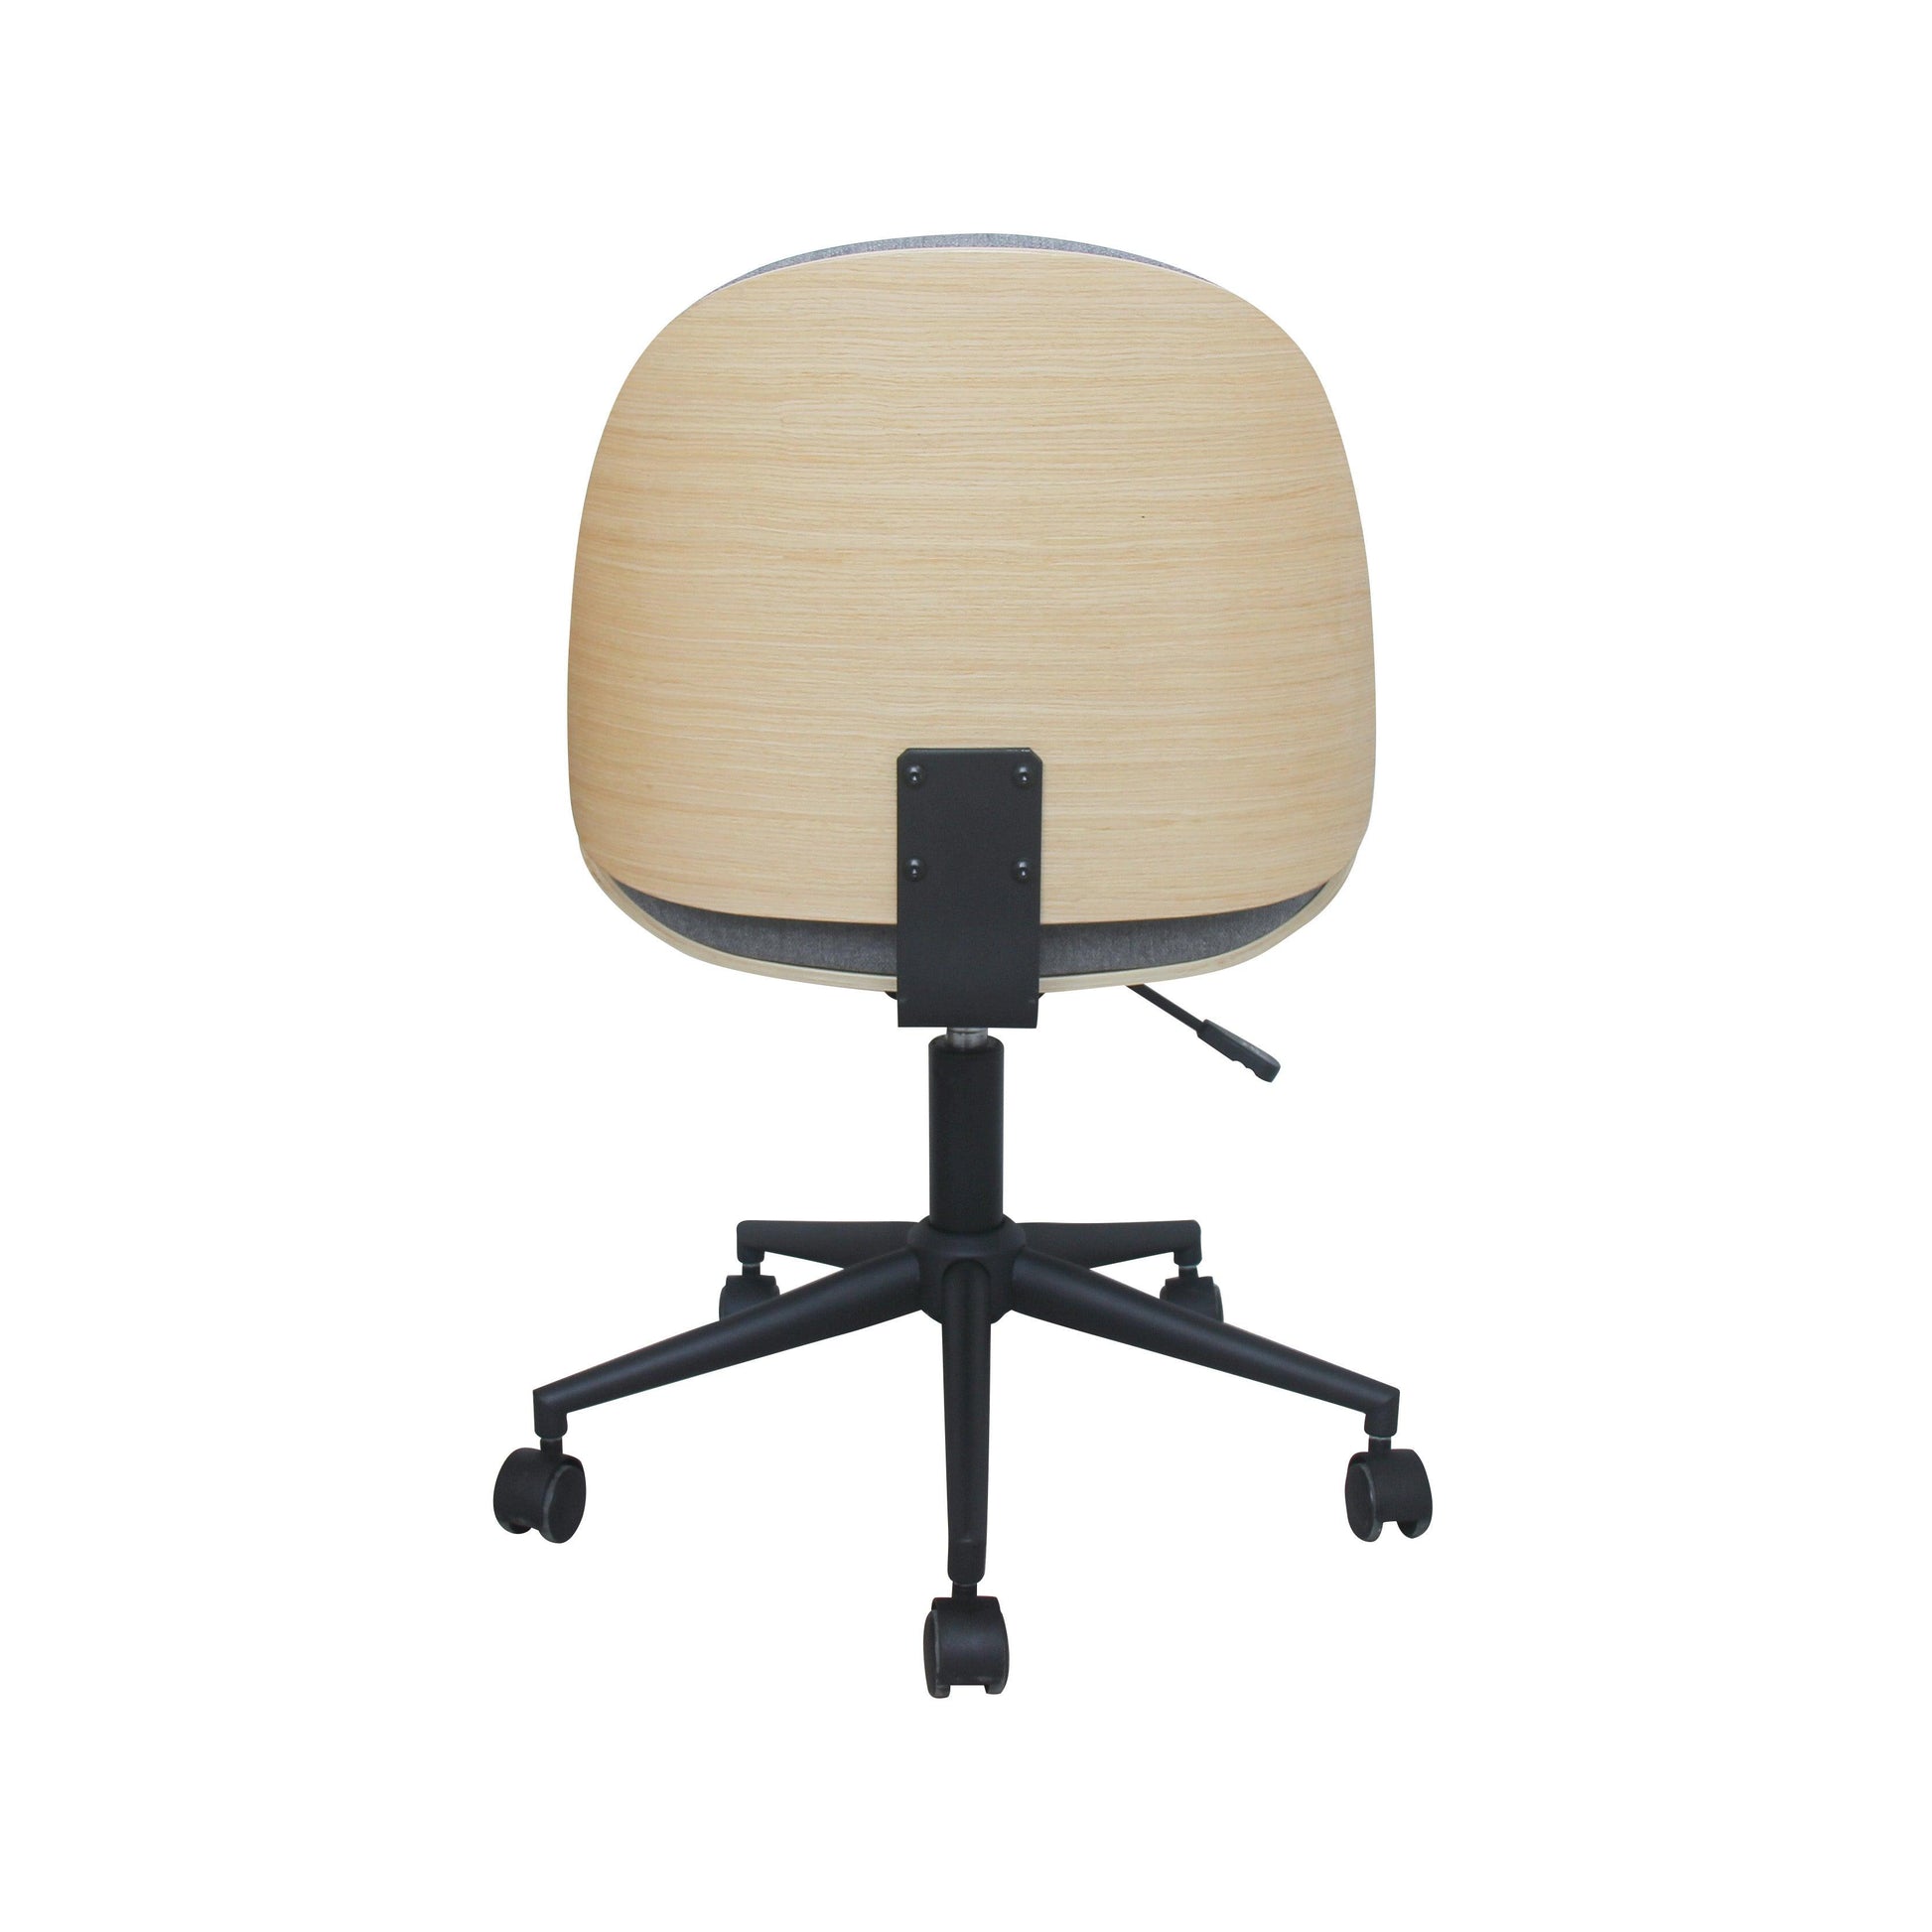 Mio Fabric Adjustable Swivel Office Chair - Grey - Chotto Furniture